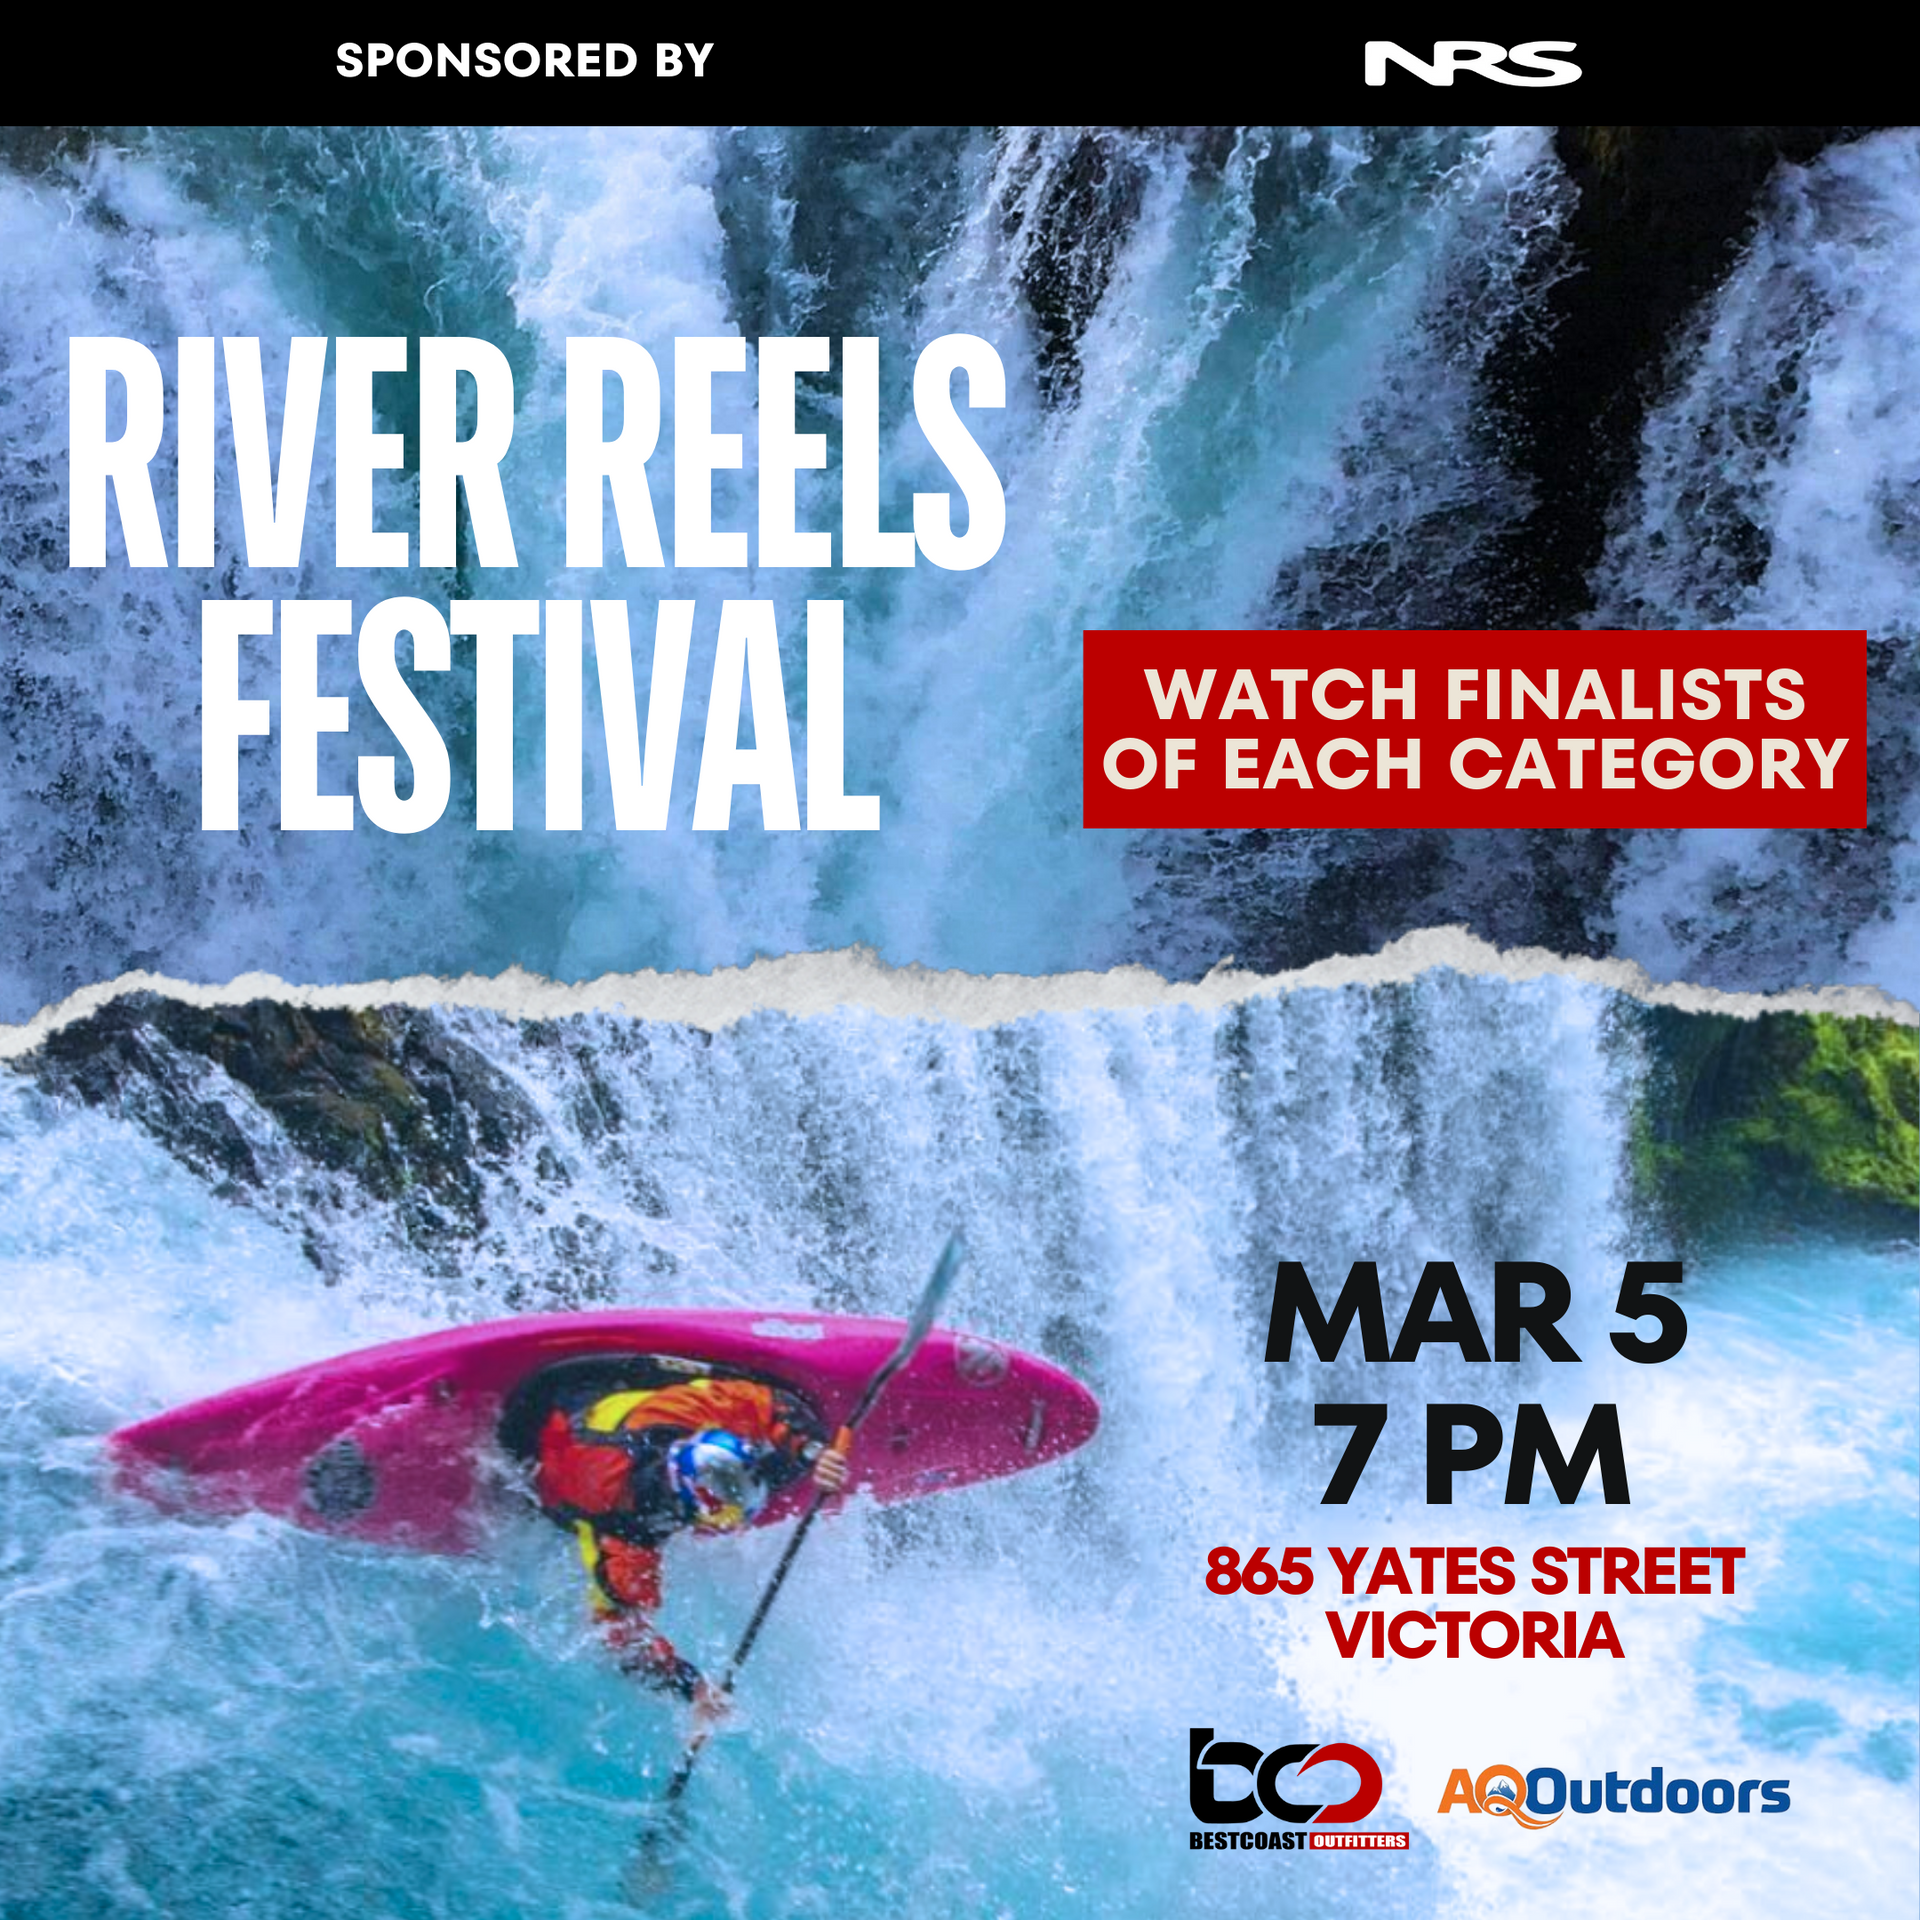 River Reels Film Festival Ticket x1